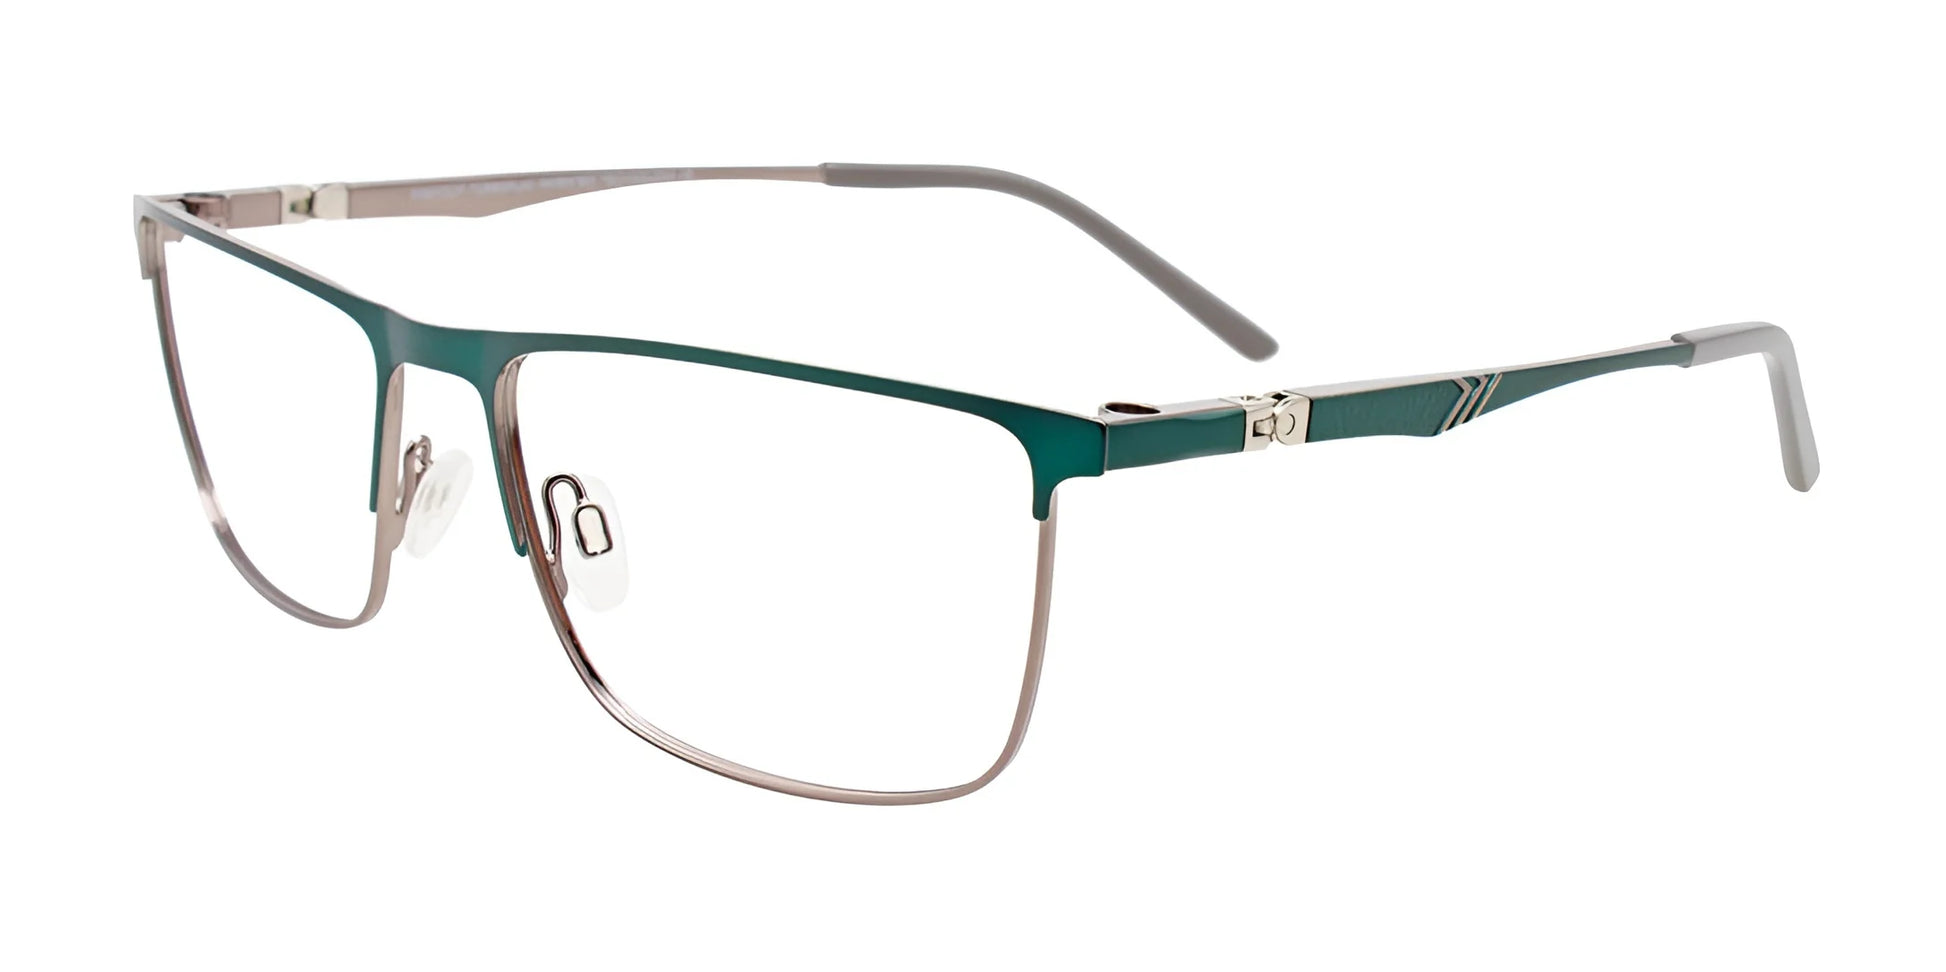 EasyClip EC616 Eyeglasses with Clip-on Sunglasses Green & Steel